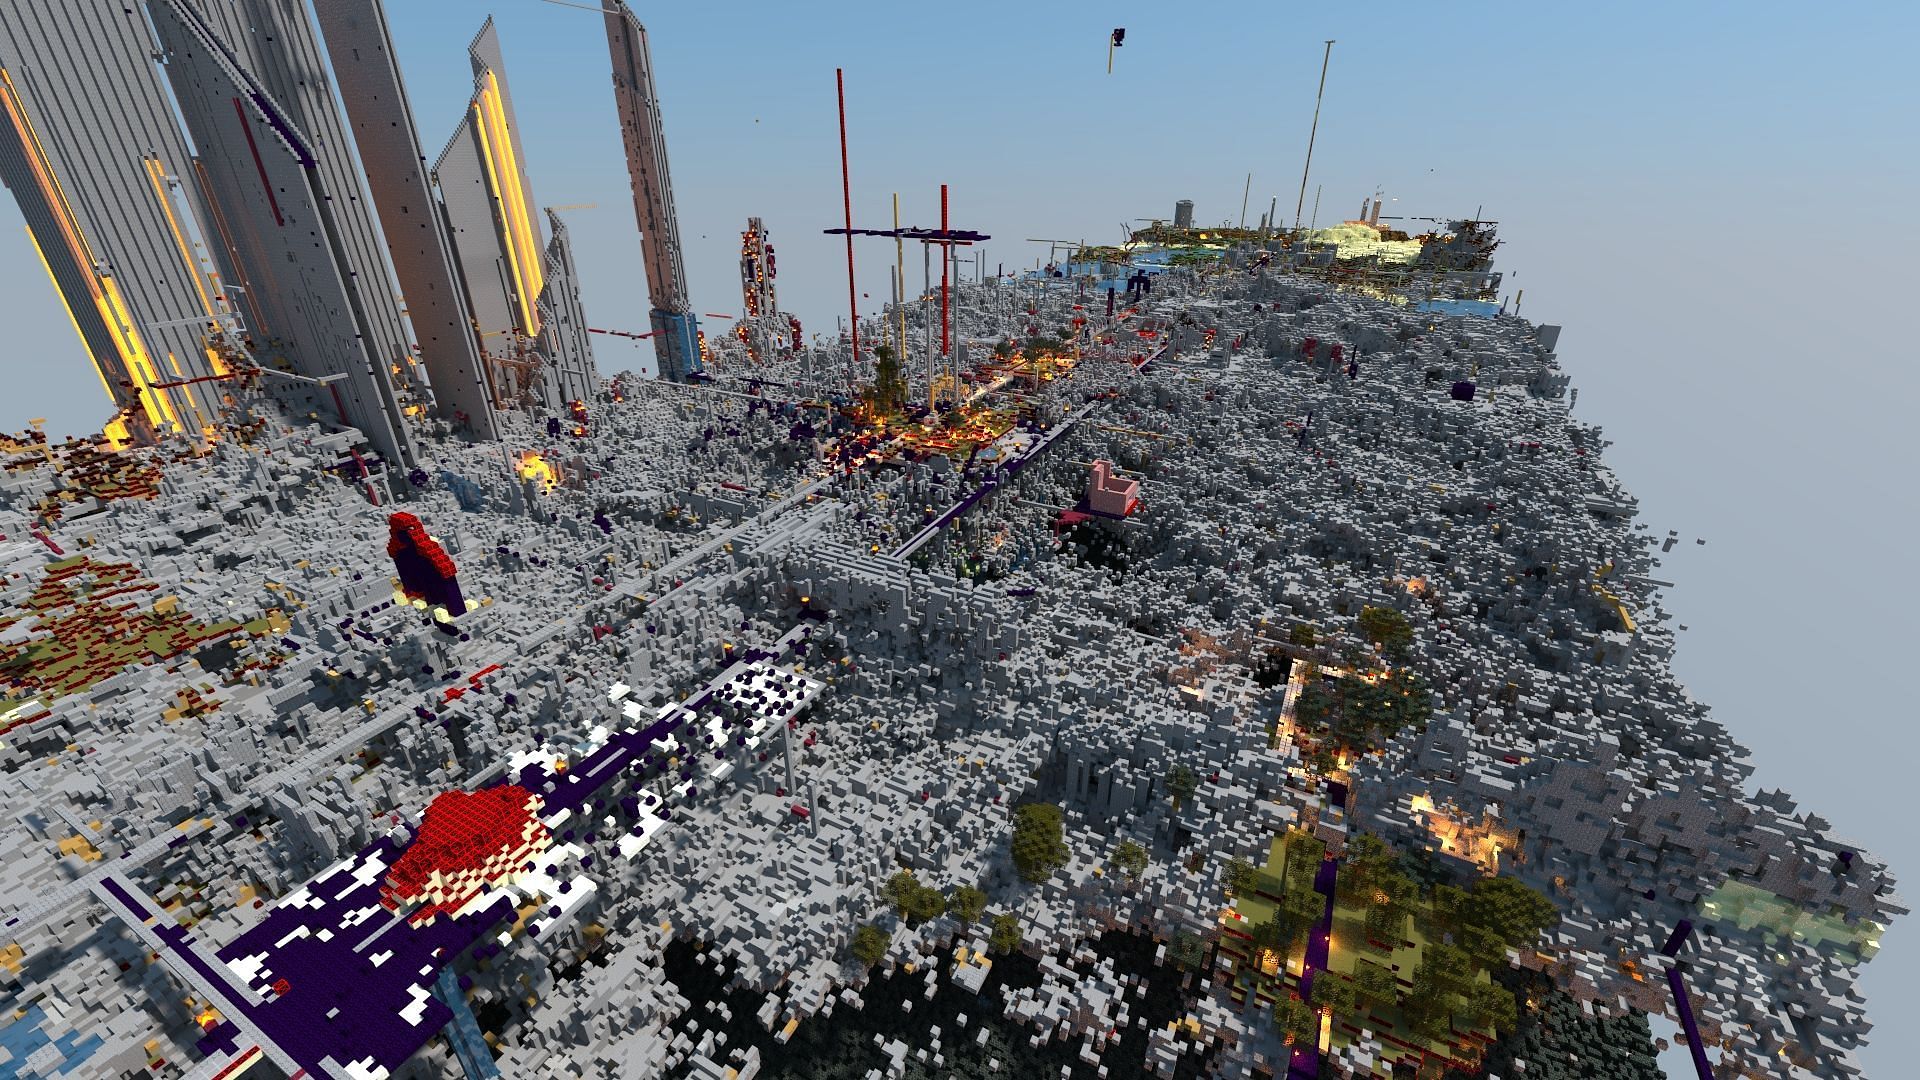 2b2t spawn area in Minecraft (Image via Reddit/u/bignick0)